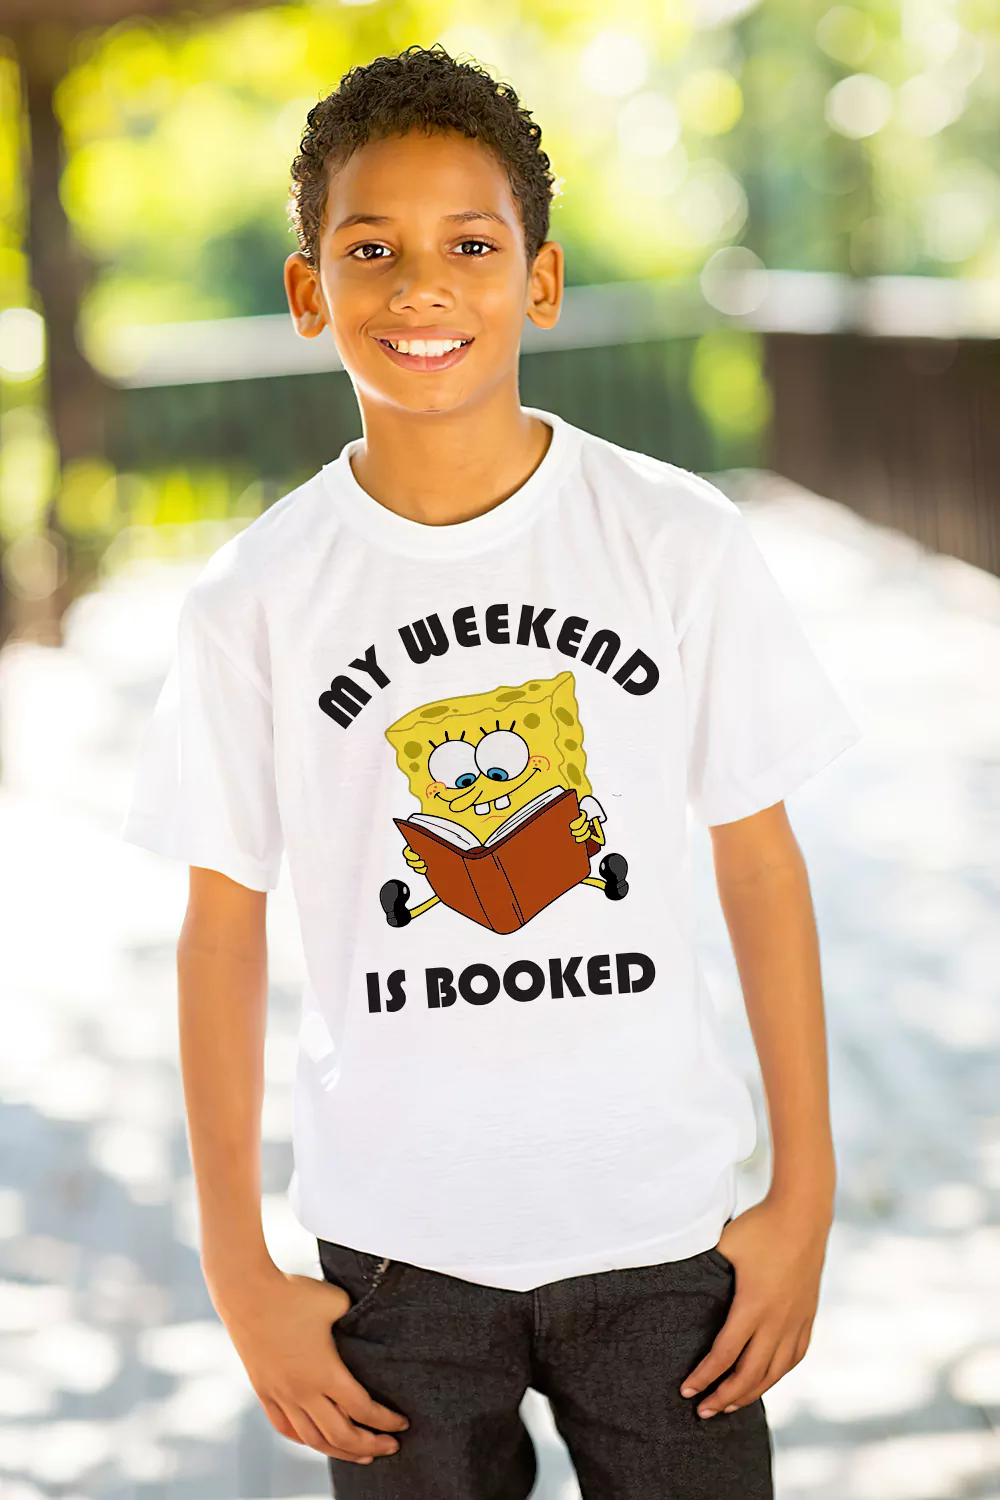 Sponge Bob weekend is booked t shirt for school boy